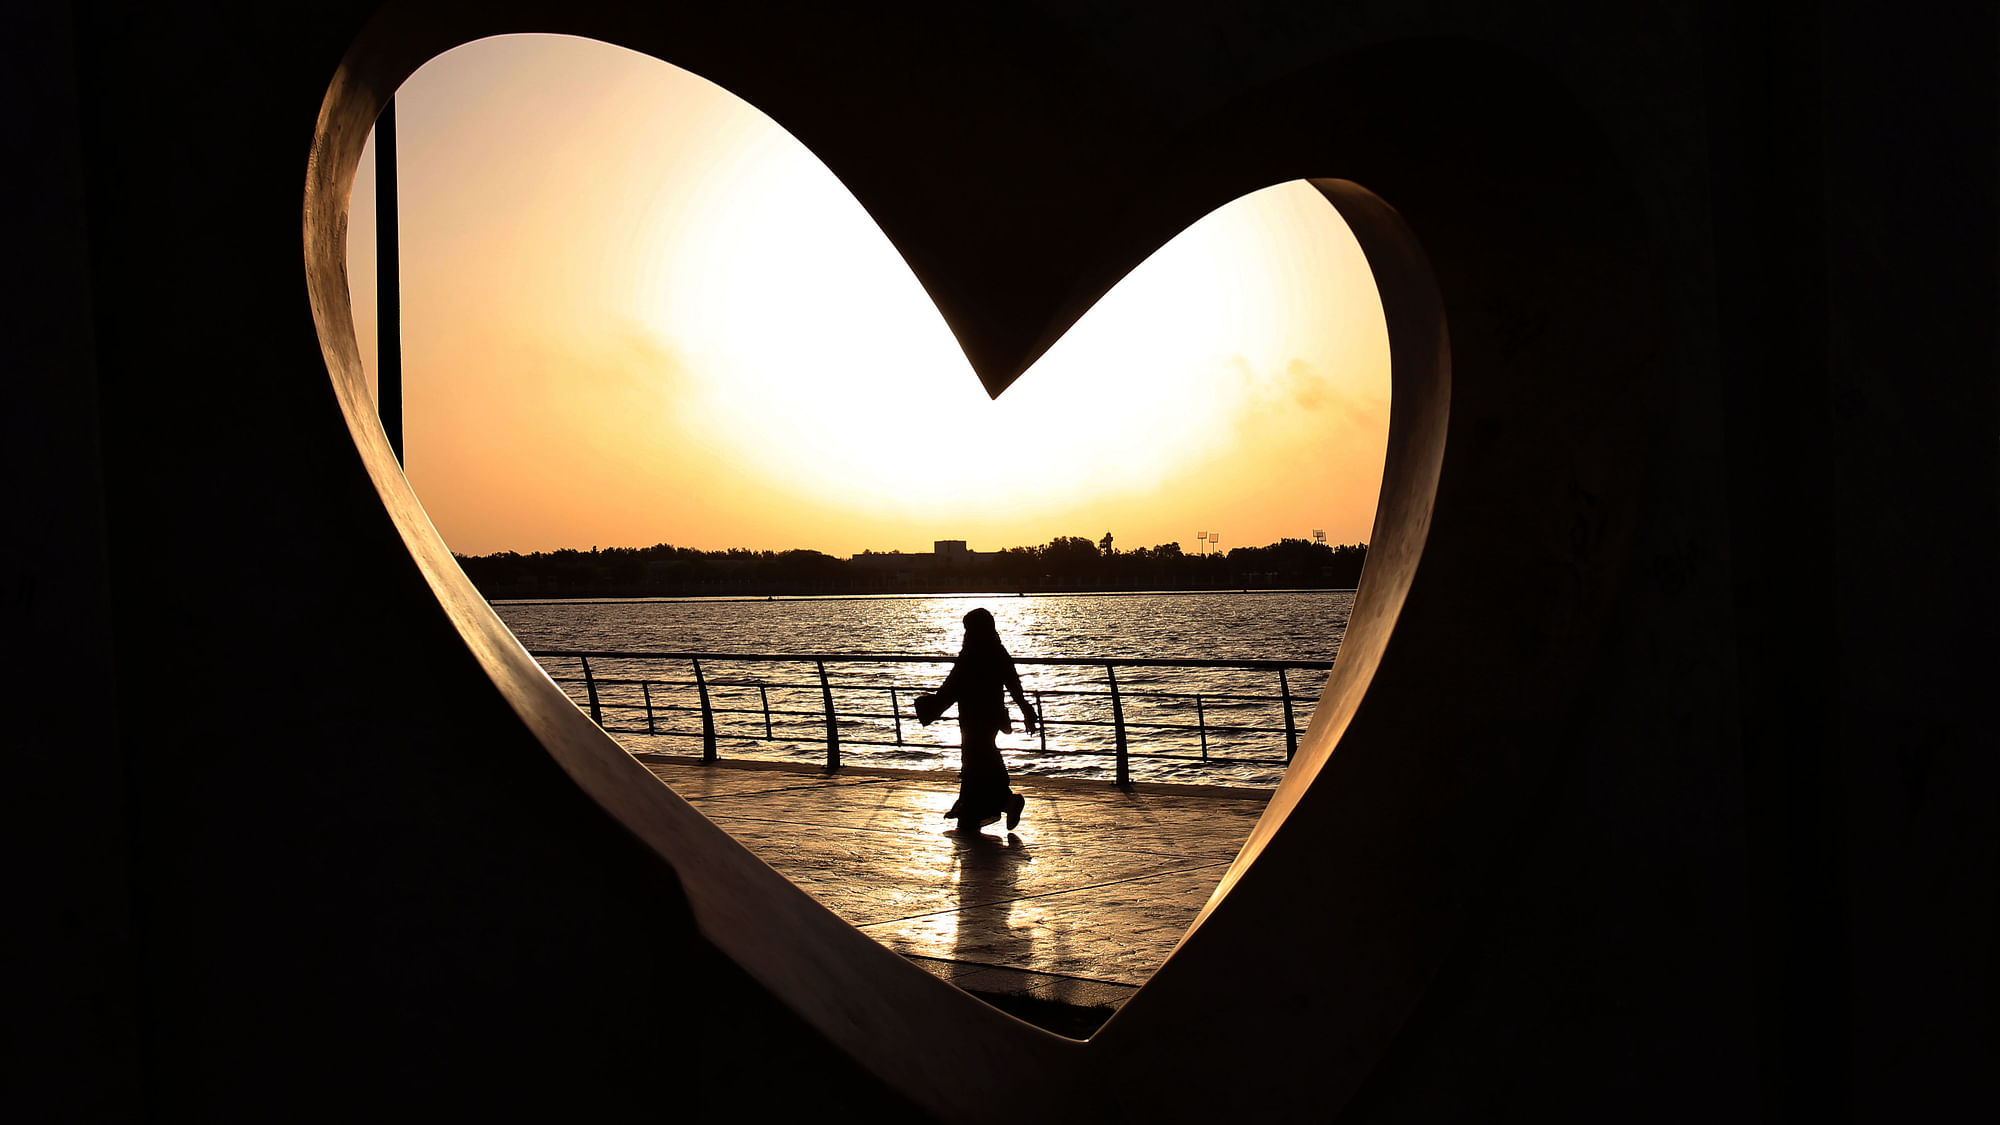 A Saudi woman walks past a heart-shaped structure. (Photo: AP)